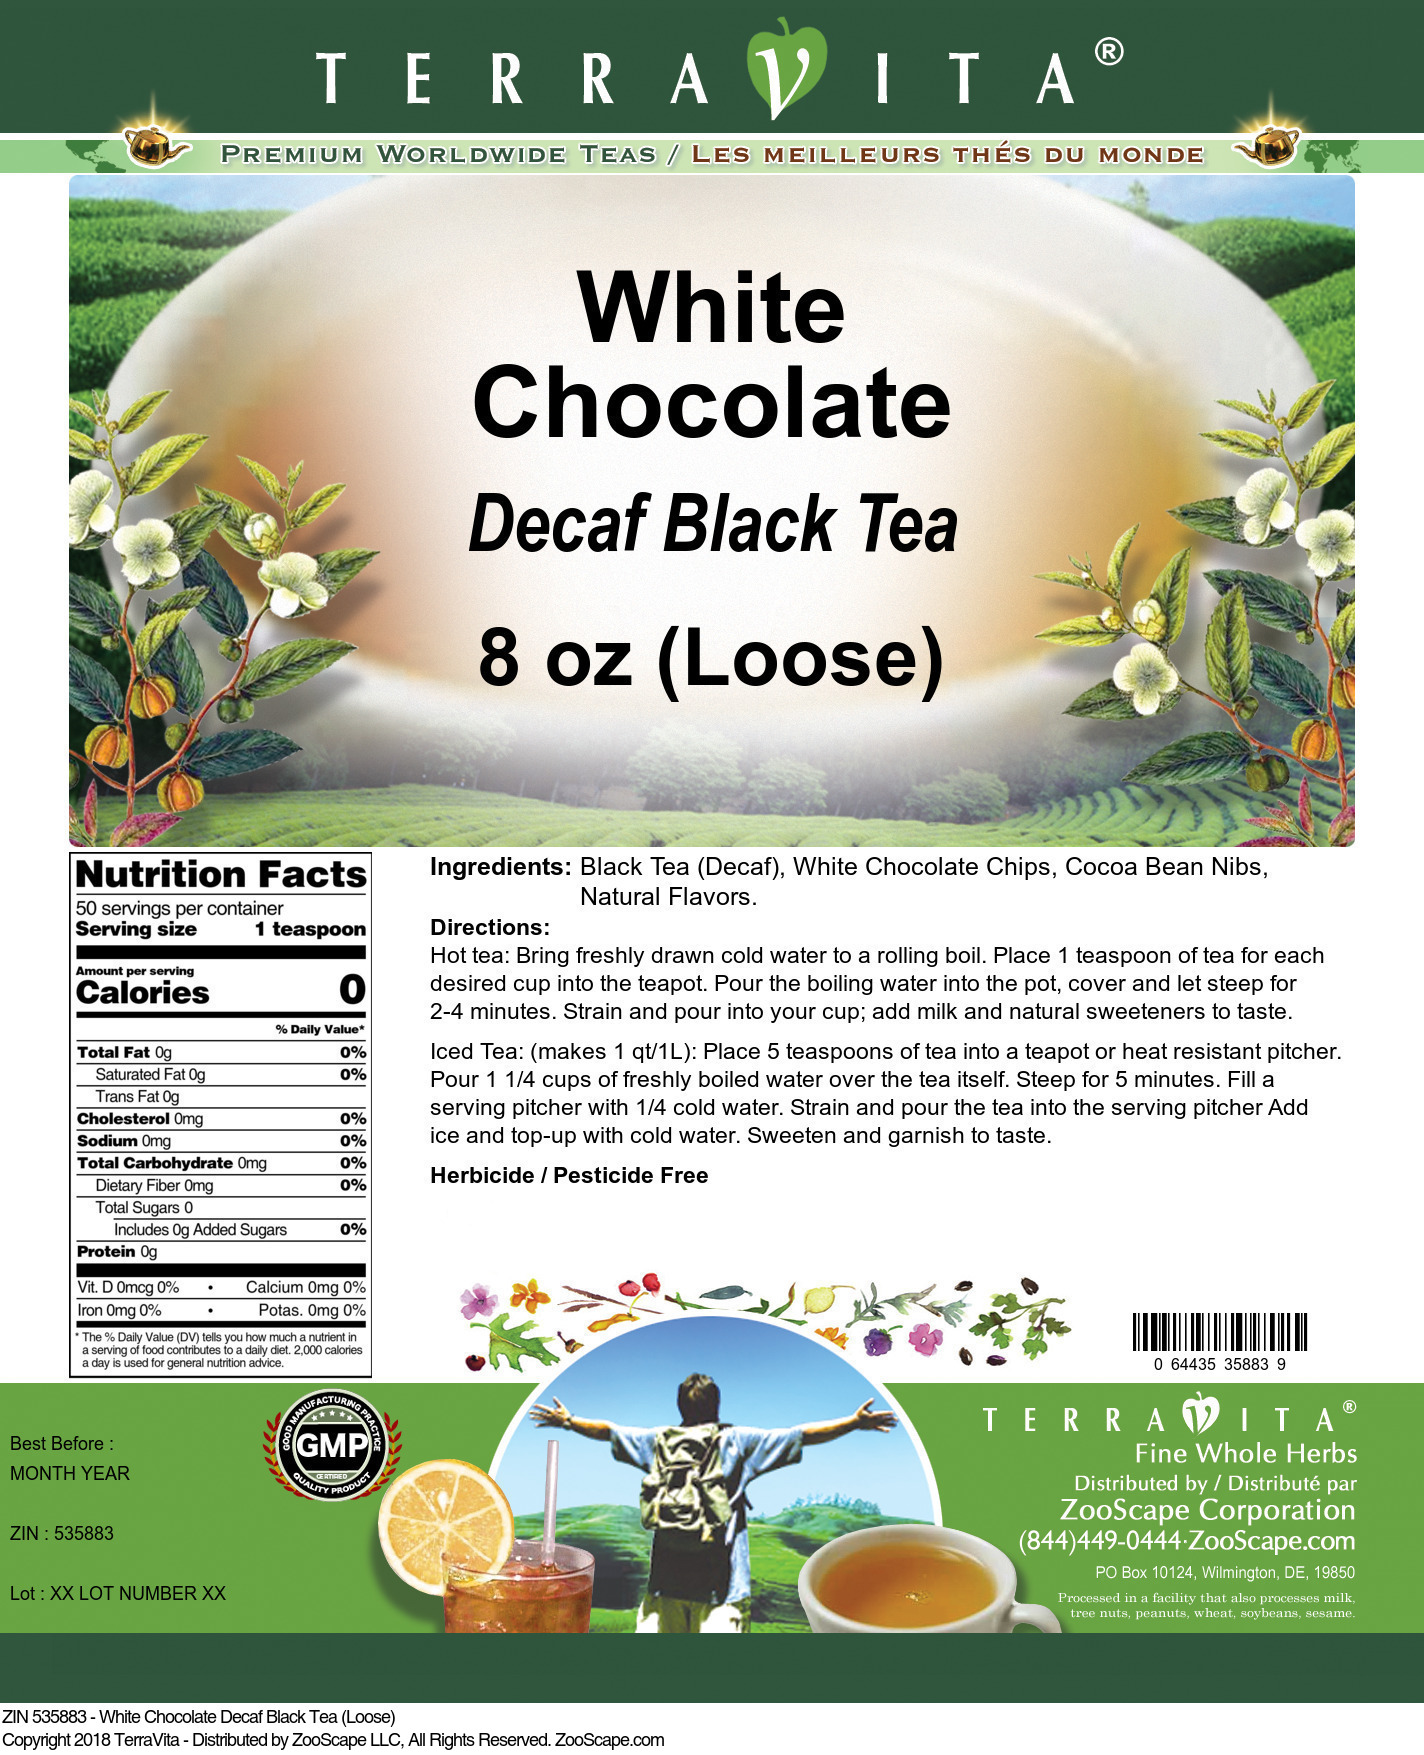 White Chocolate Decaf Black Tea (Loose) - Label